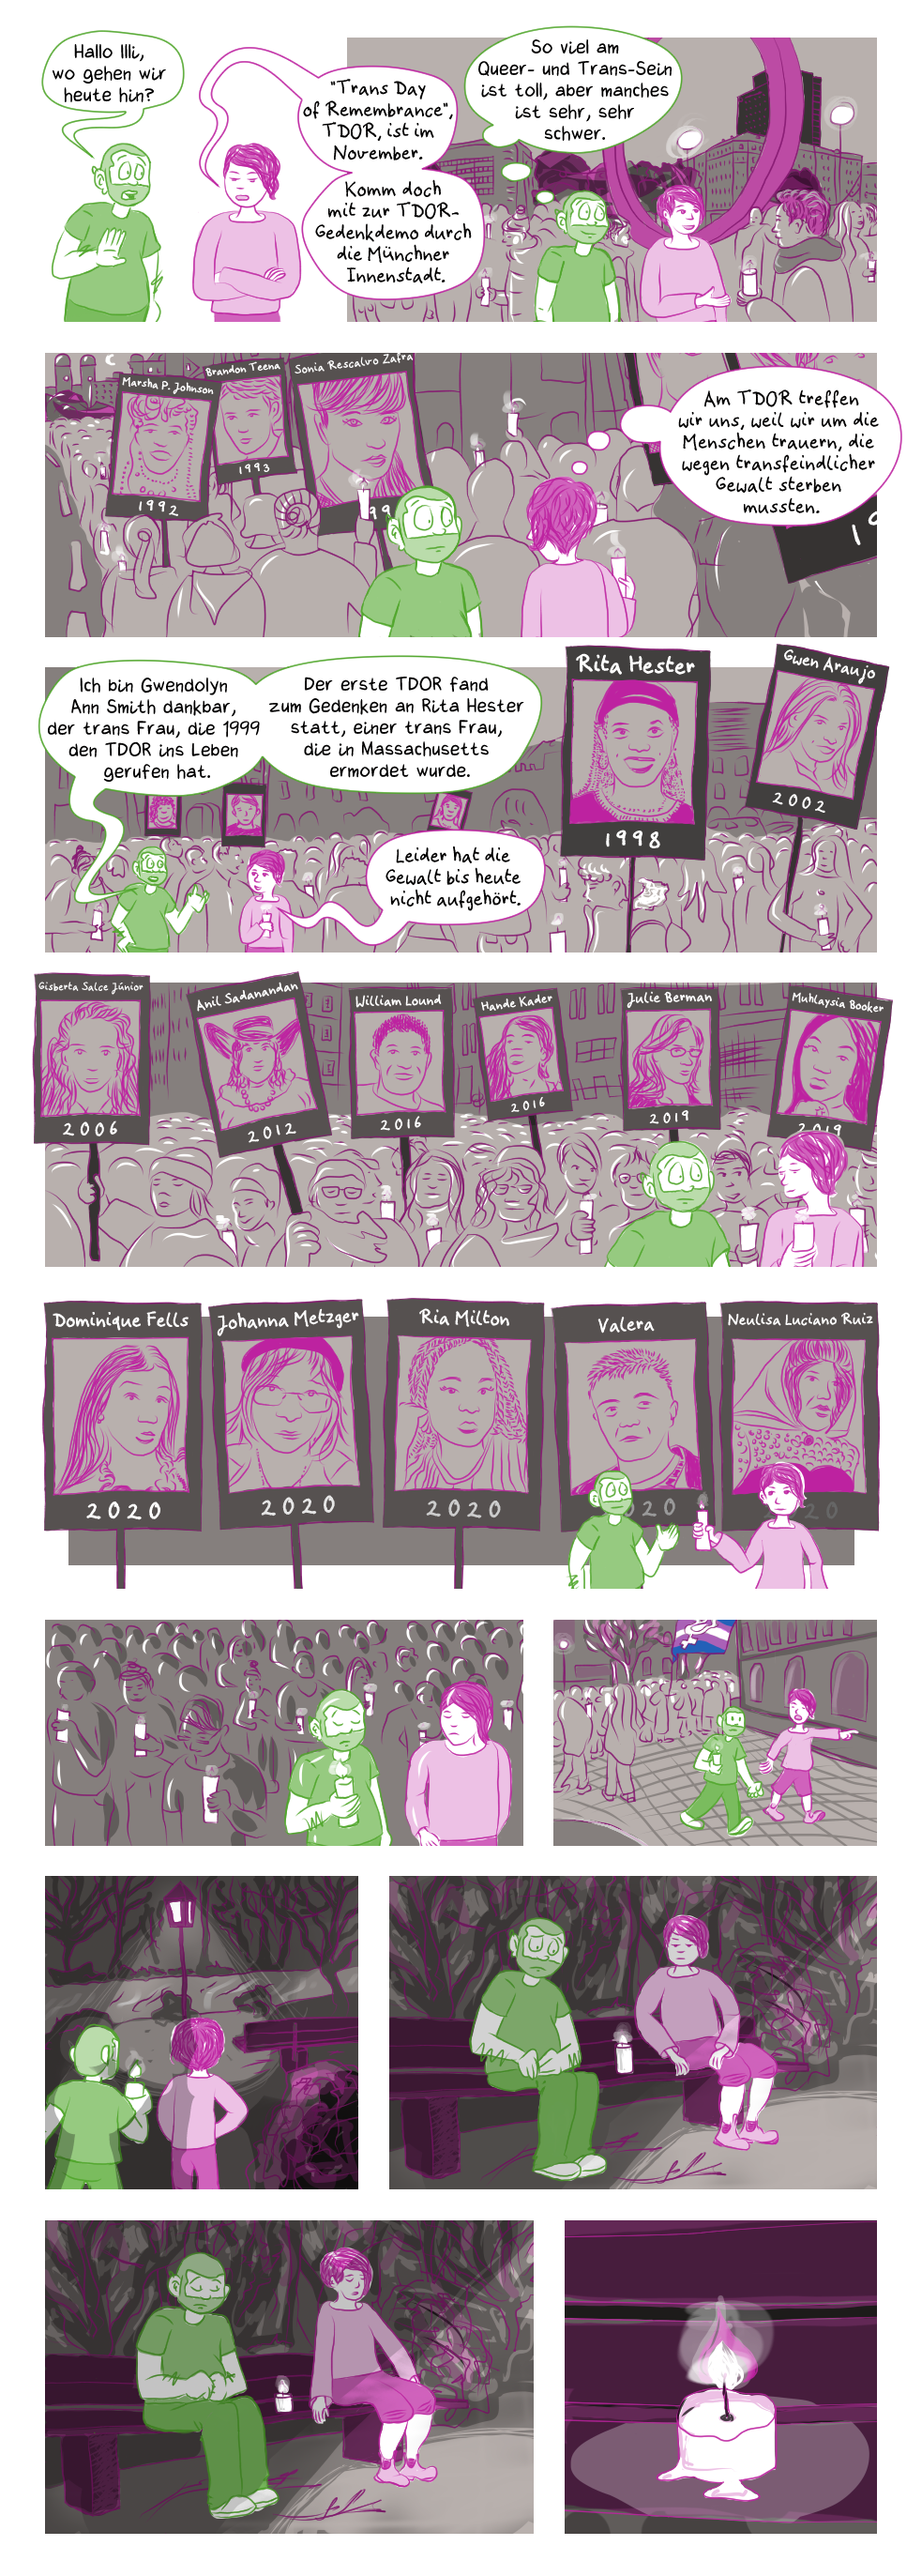 visuelles Comic: Queere Comic Konversation: November - TDOR, rein text-basiertes Comic folgt nach den Anmerkungen